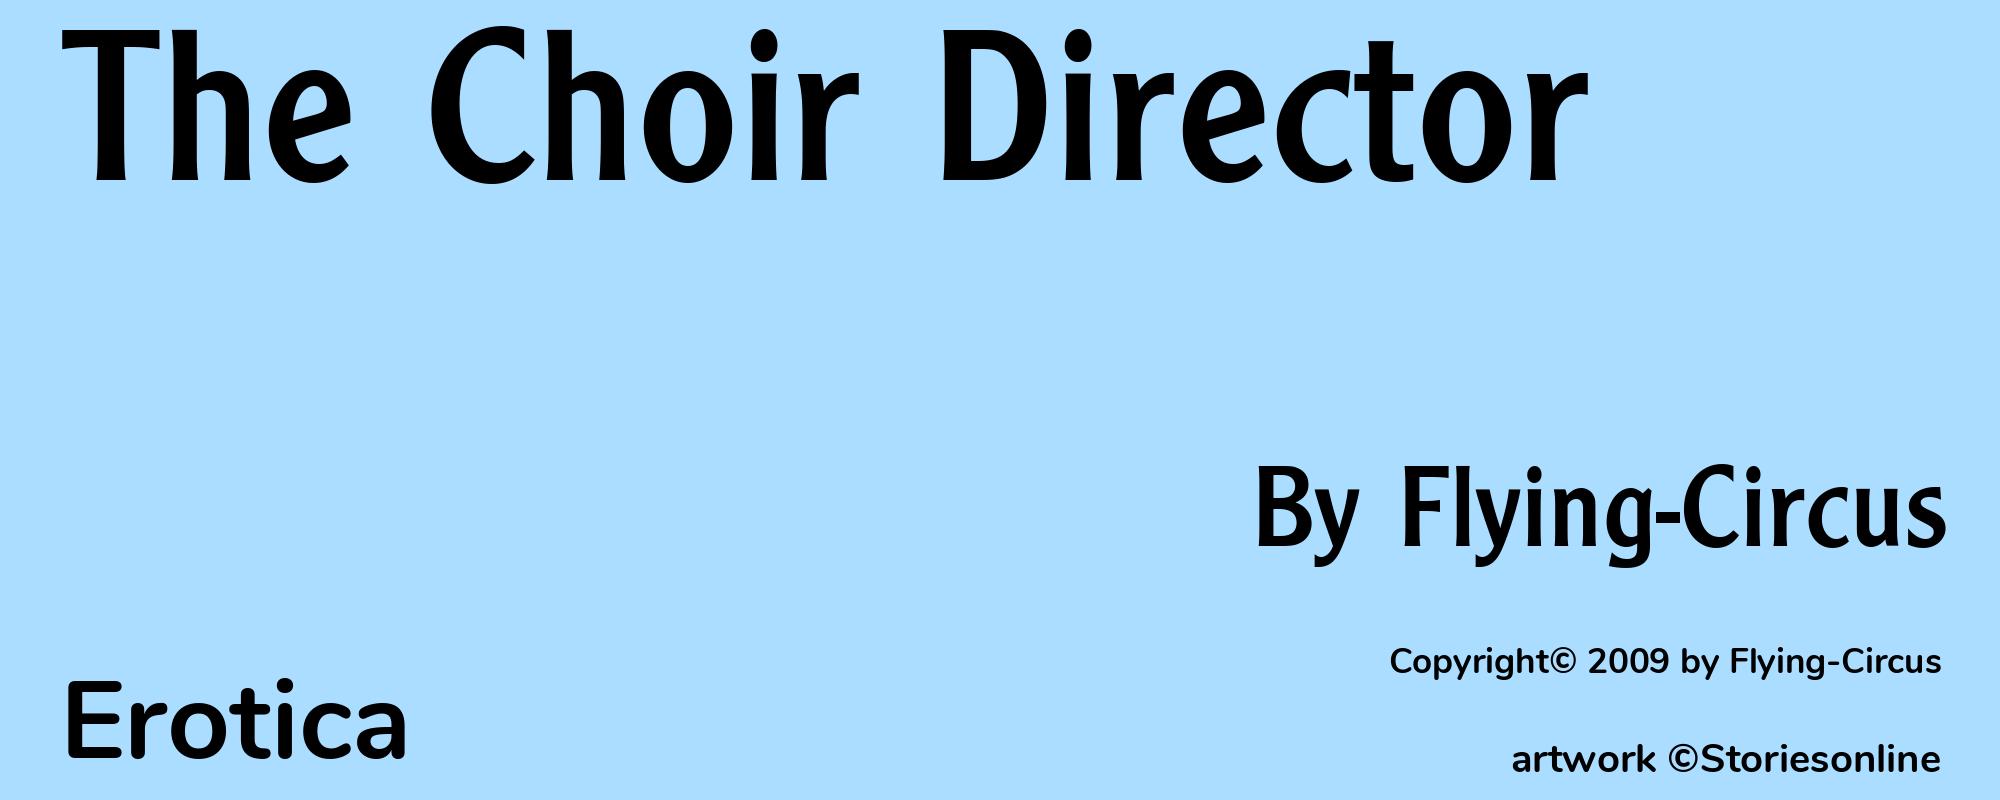 The Choir Director - Cover